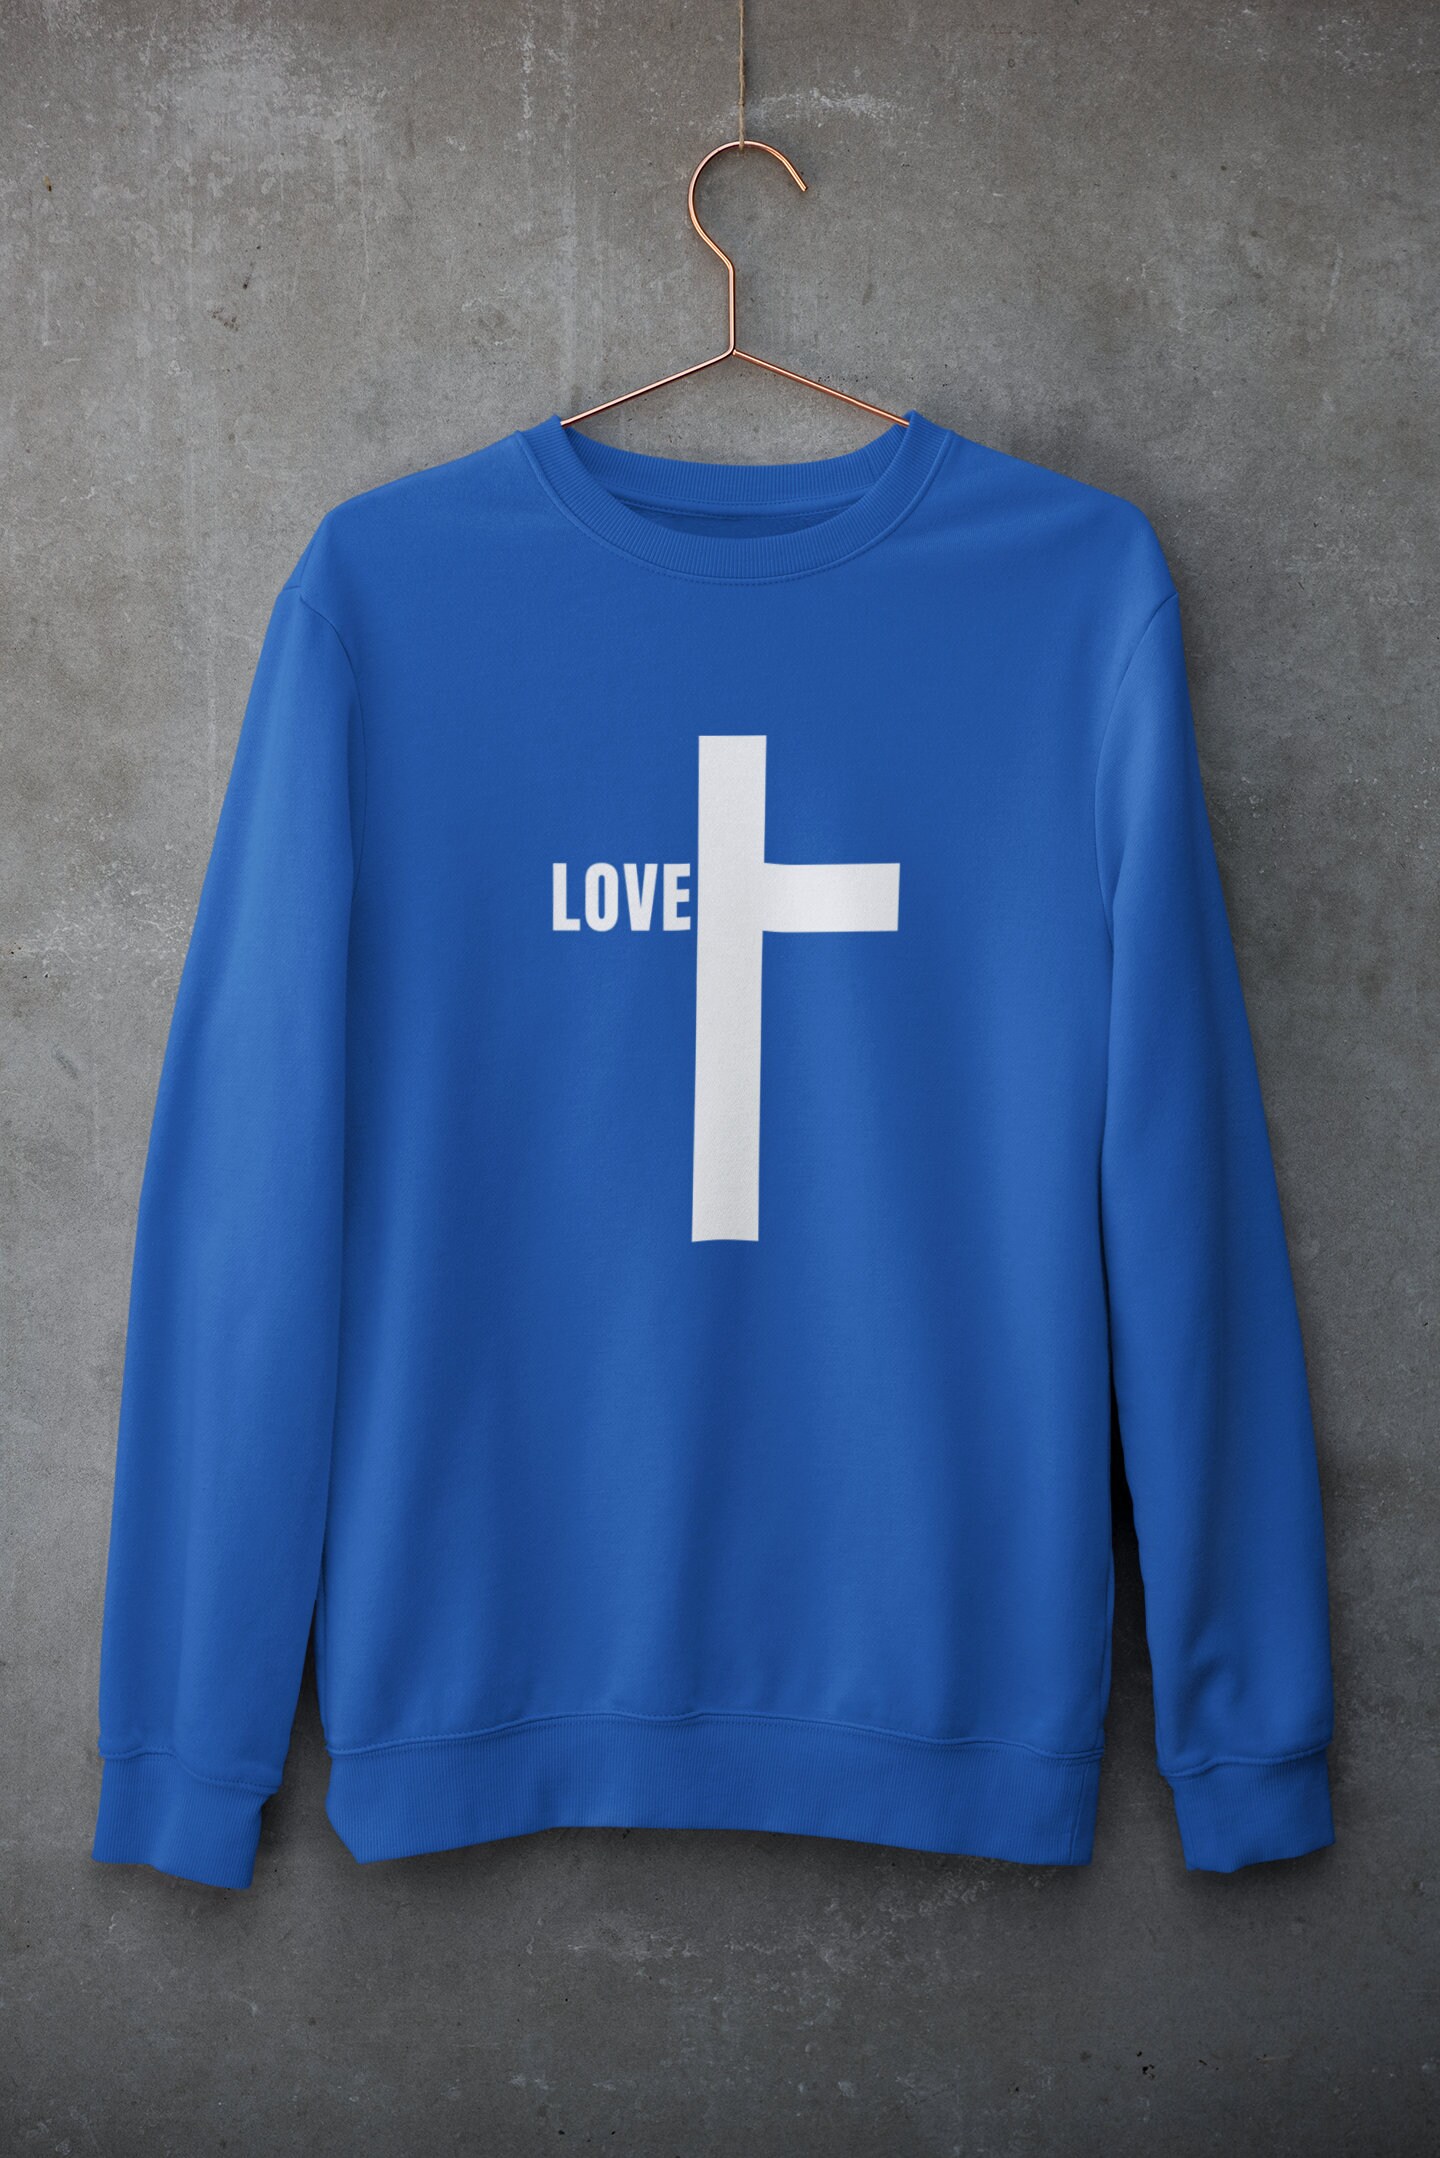 Love Cross Sweatshirt, Comfy Christian Sweater With the Cross ...